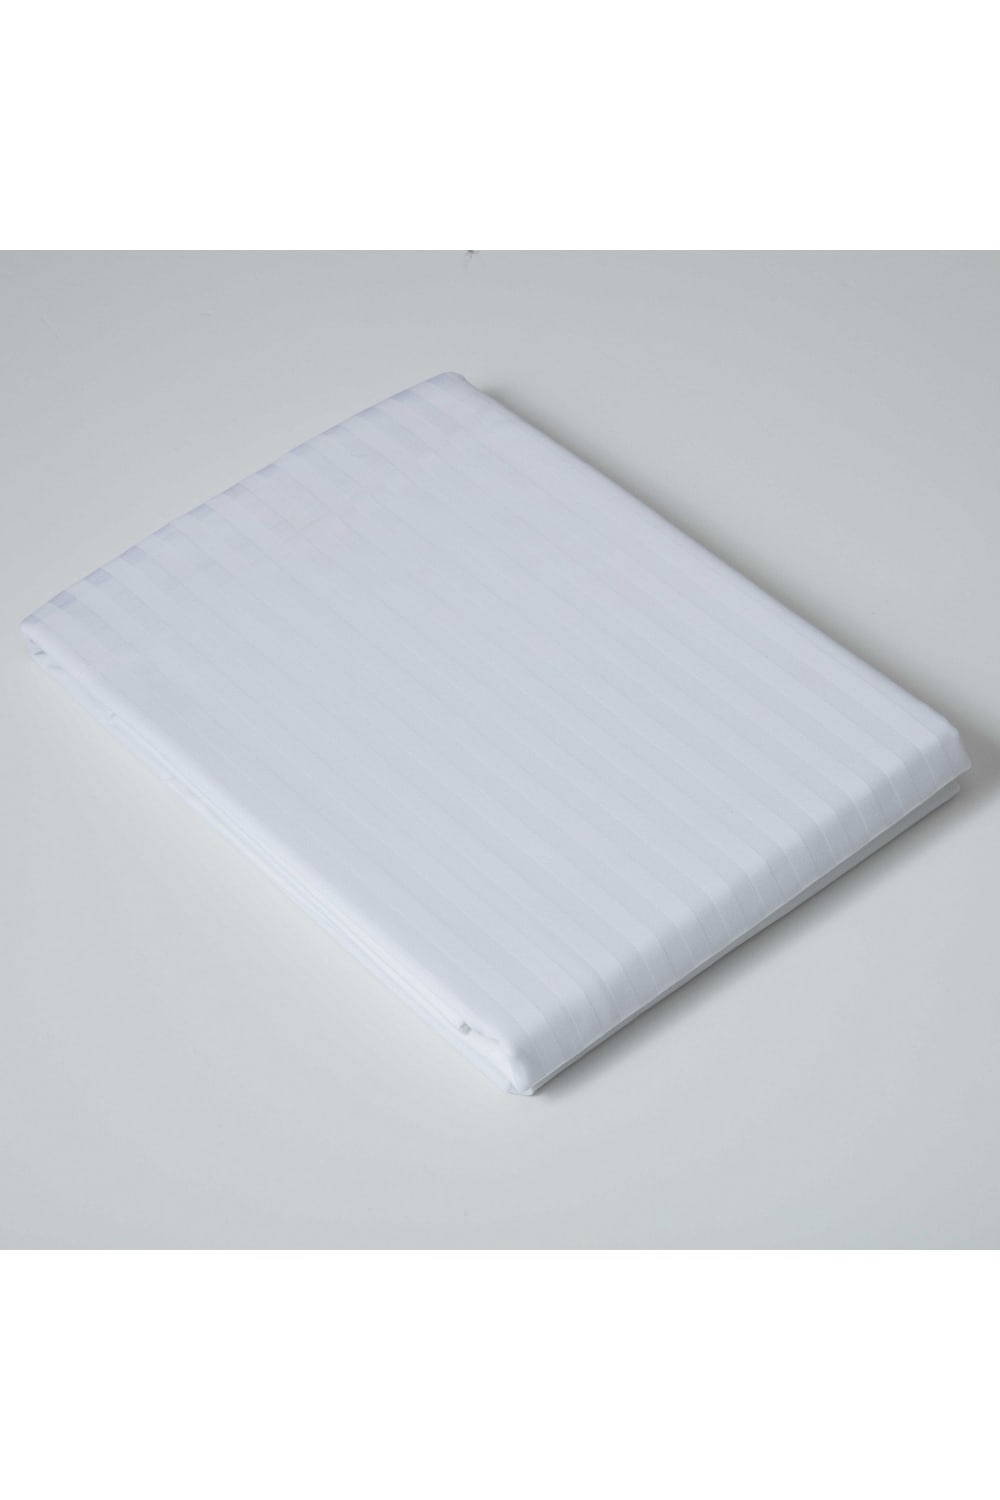 Belledorm 540 Thread Count Satin Stripe Flat Sheet (White) (Queen) (UK - Kingsize)